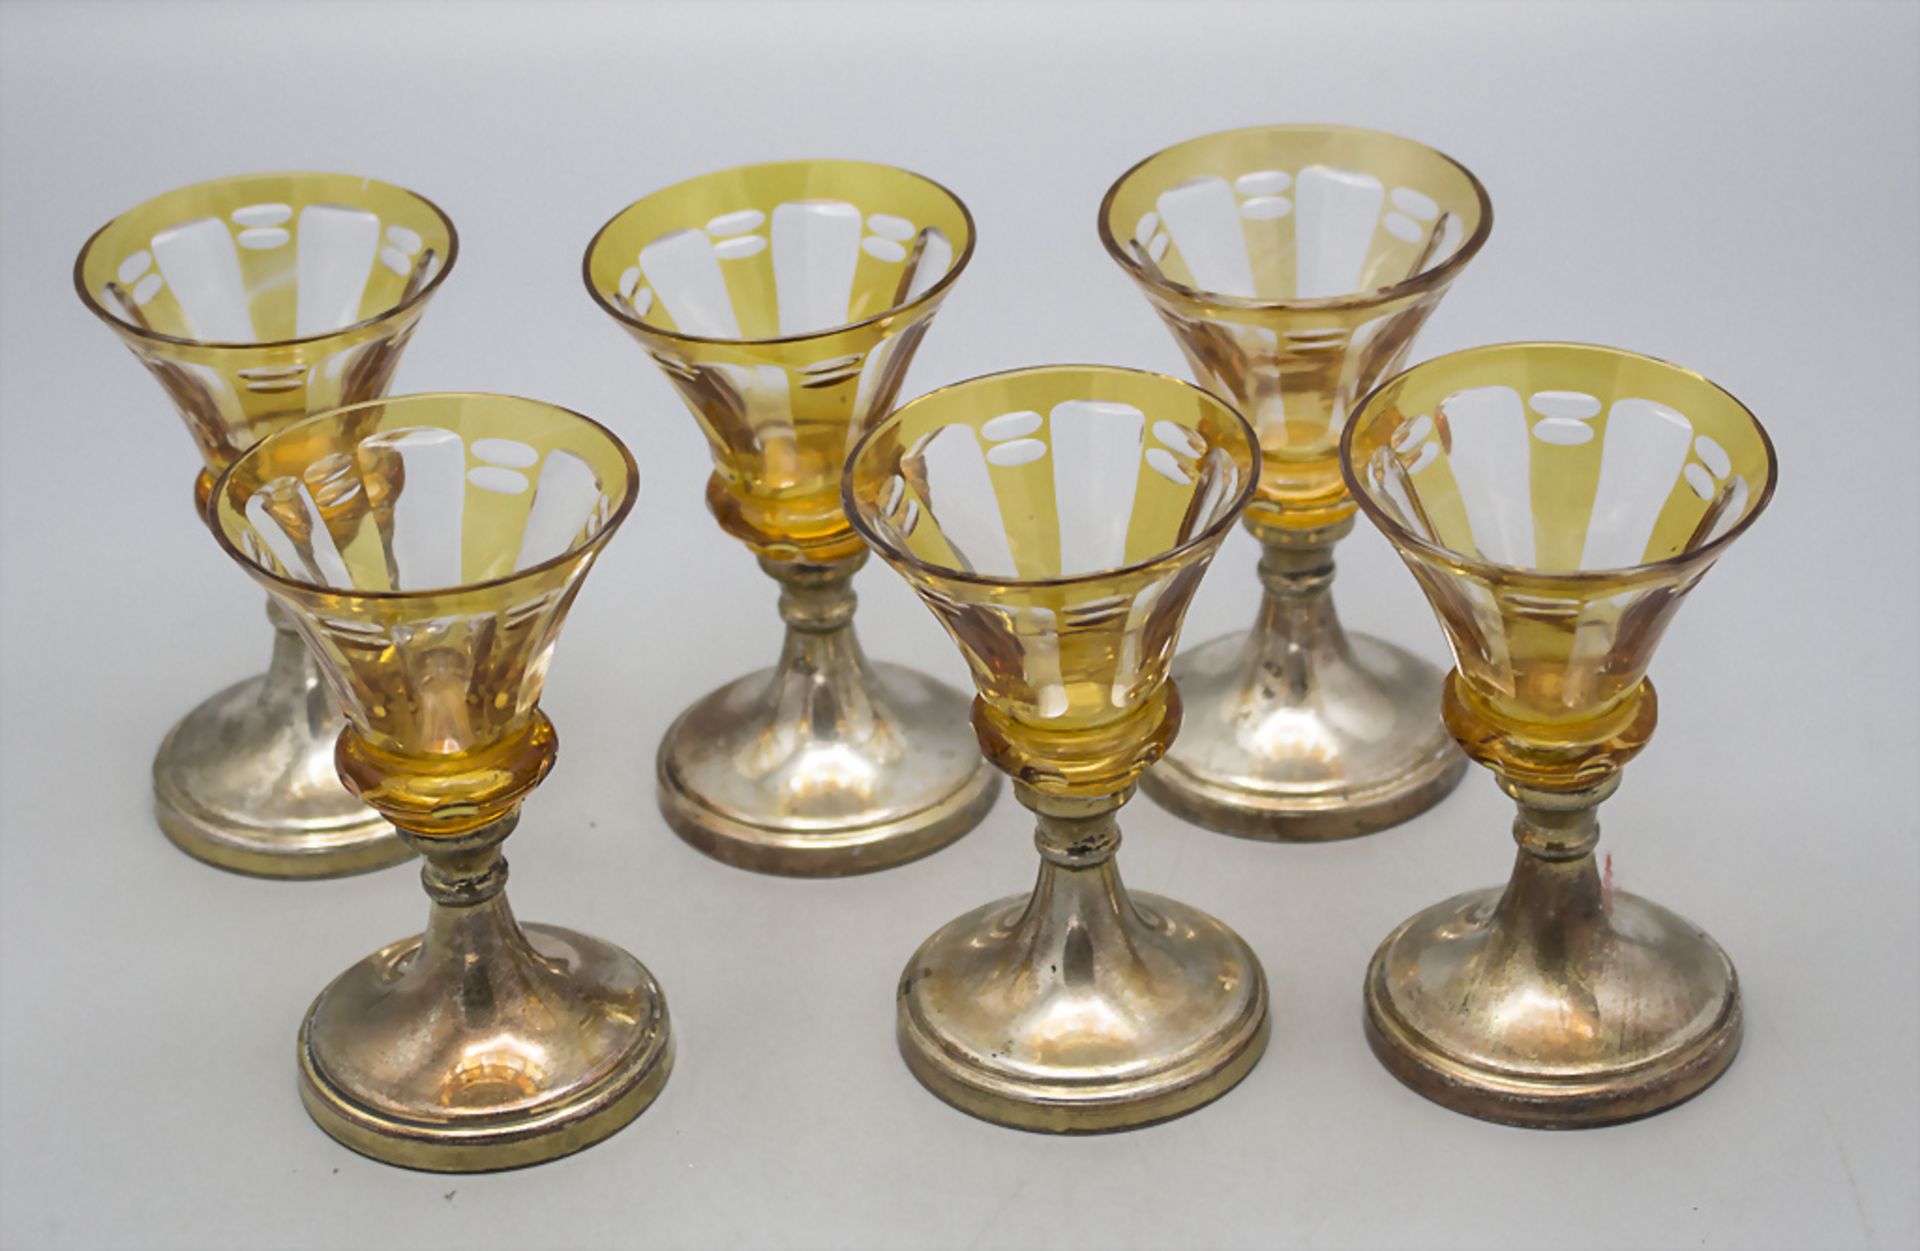 6 Likörgläser mit Silberfuß / 6 liqueur glasses on a silver foot, wohl Ende 19. Jh.